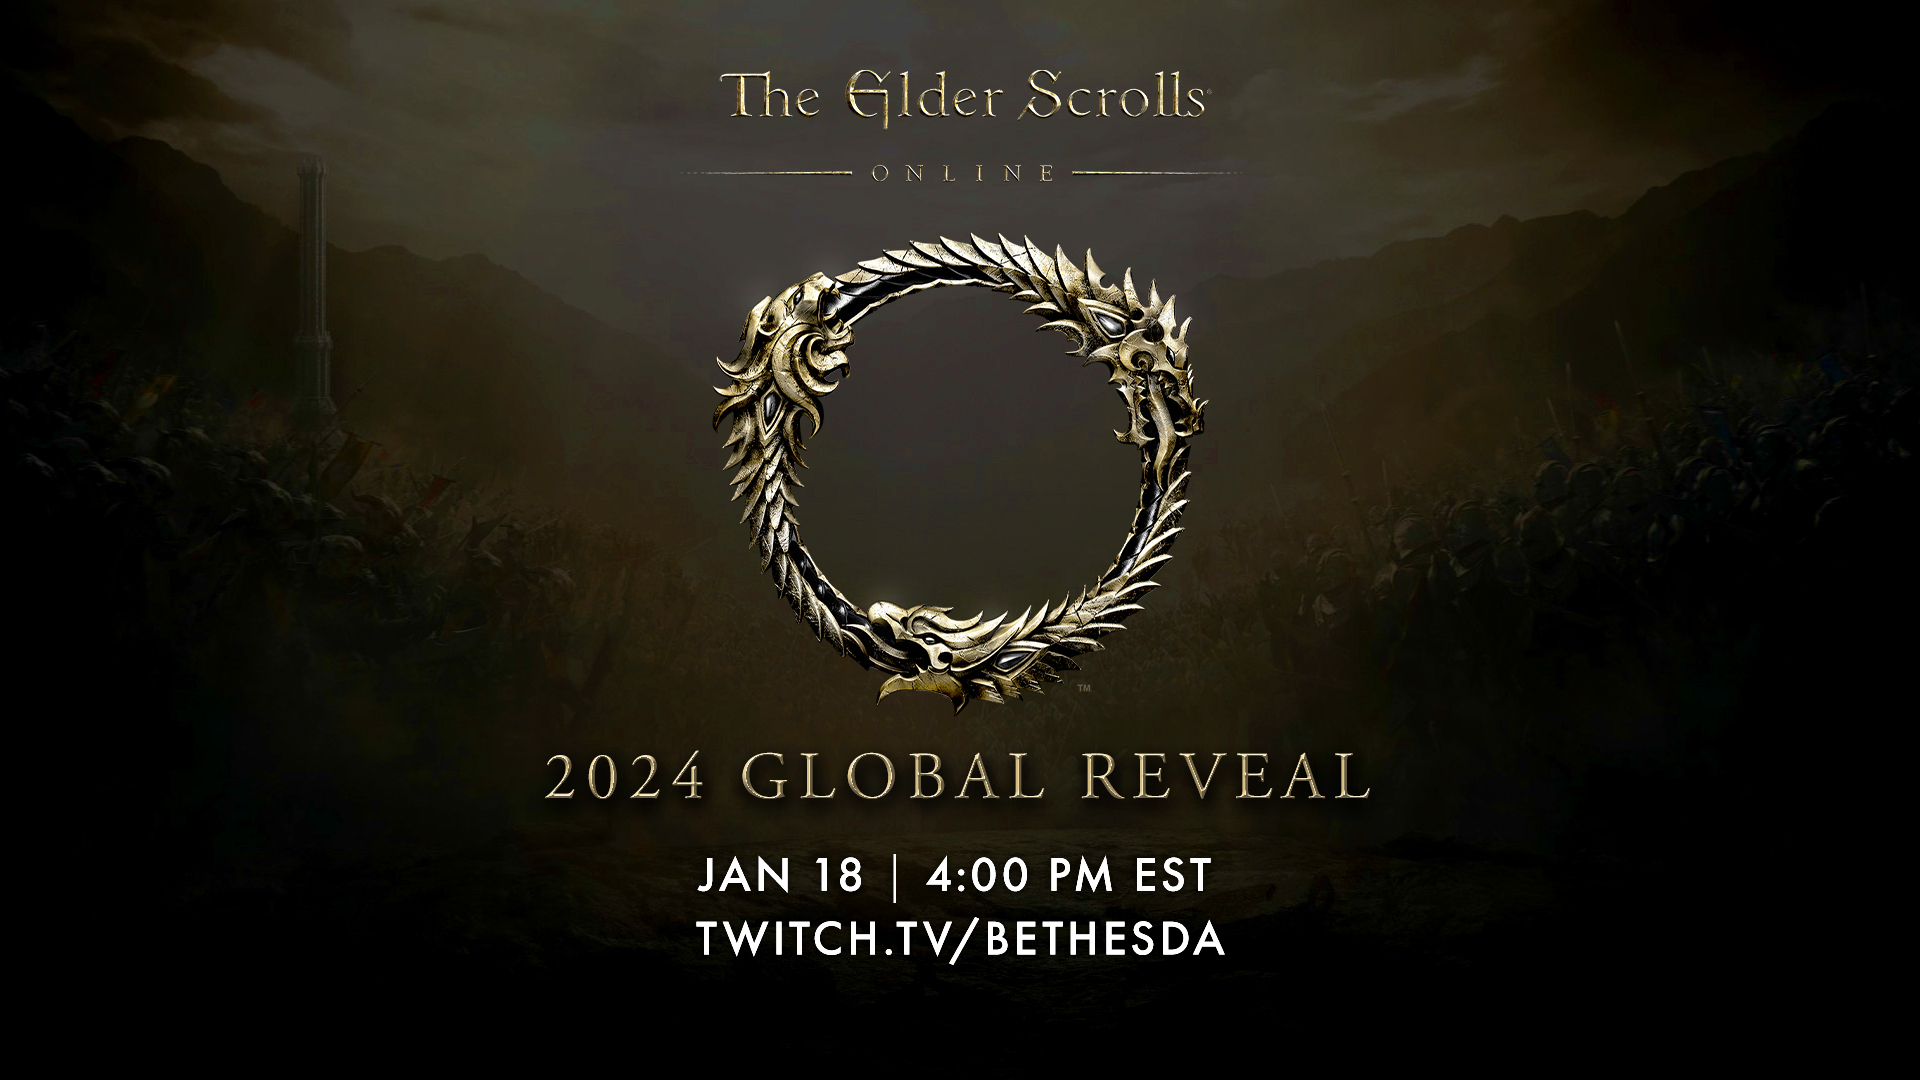 The Elder Scrolls Online 2024